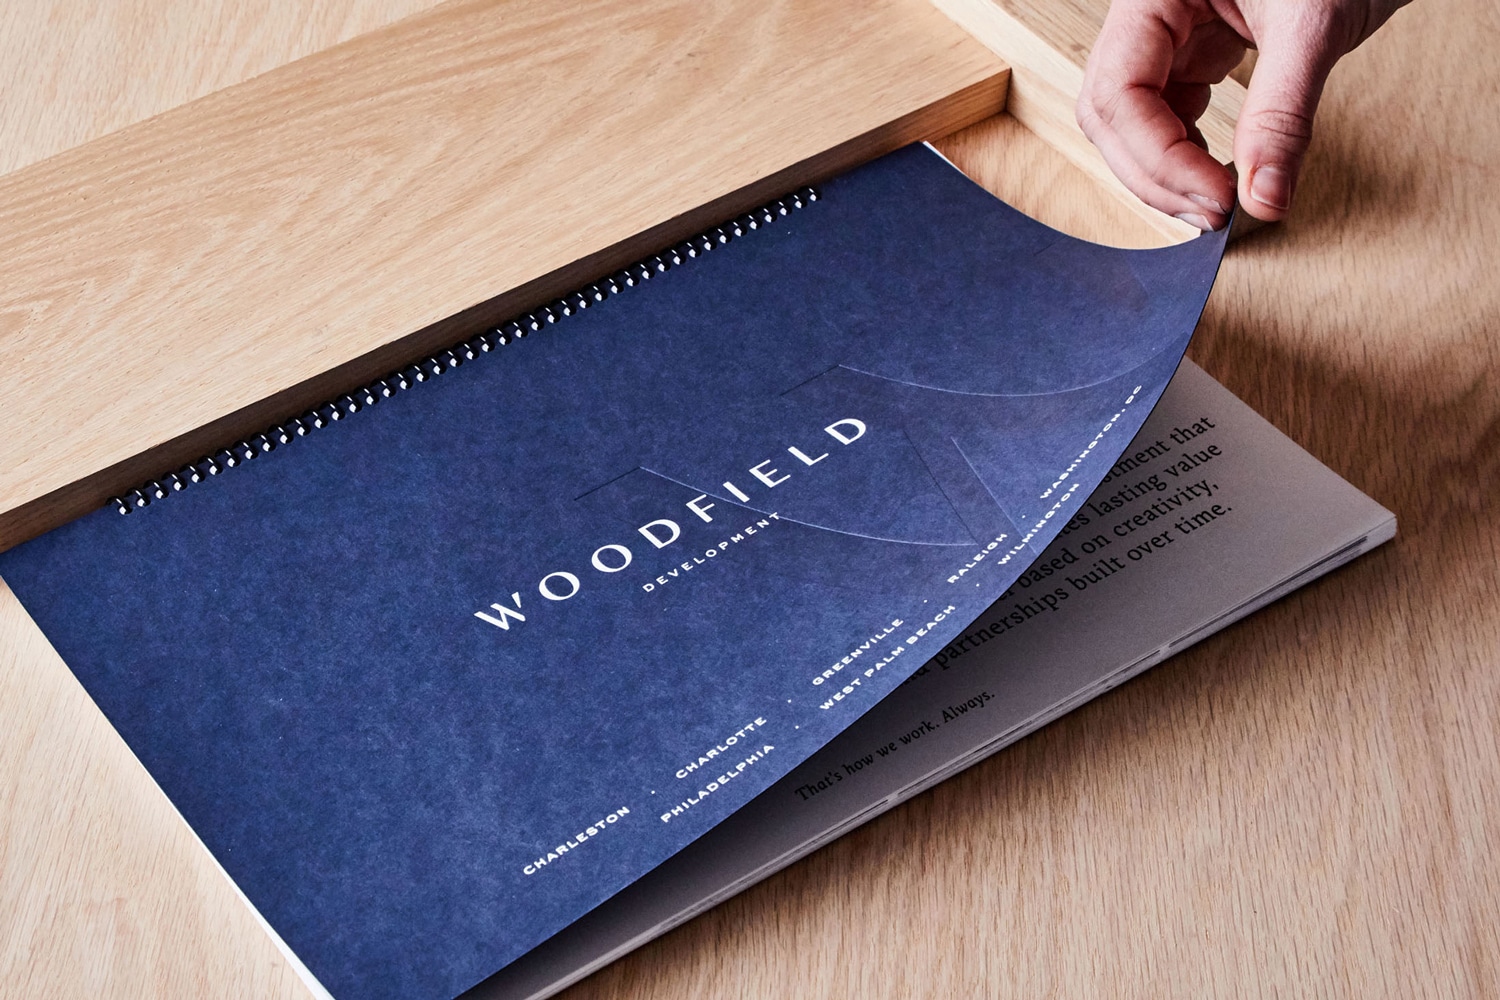 Woodfield Development | SDCO Partners